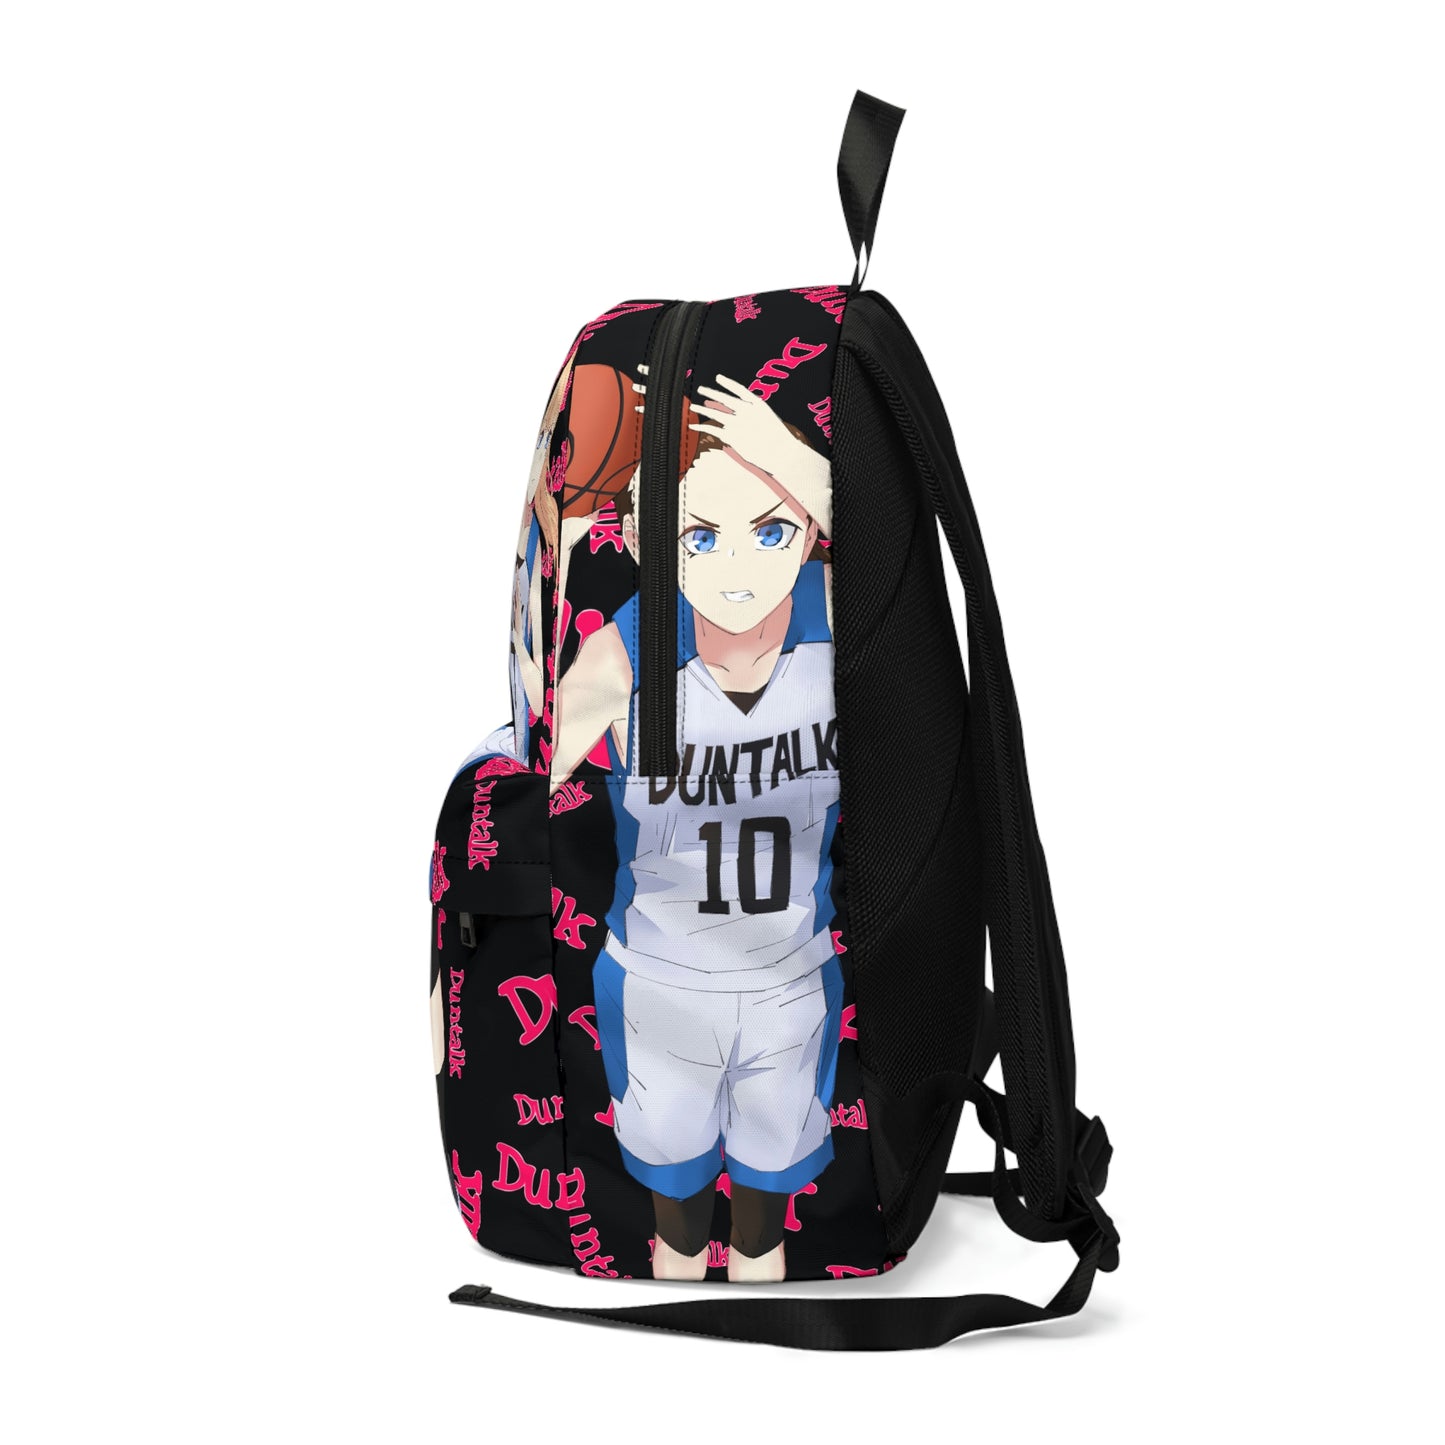 Duntalk "You Got Game" Girls Basketball Backpack